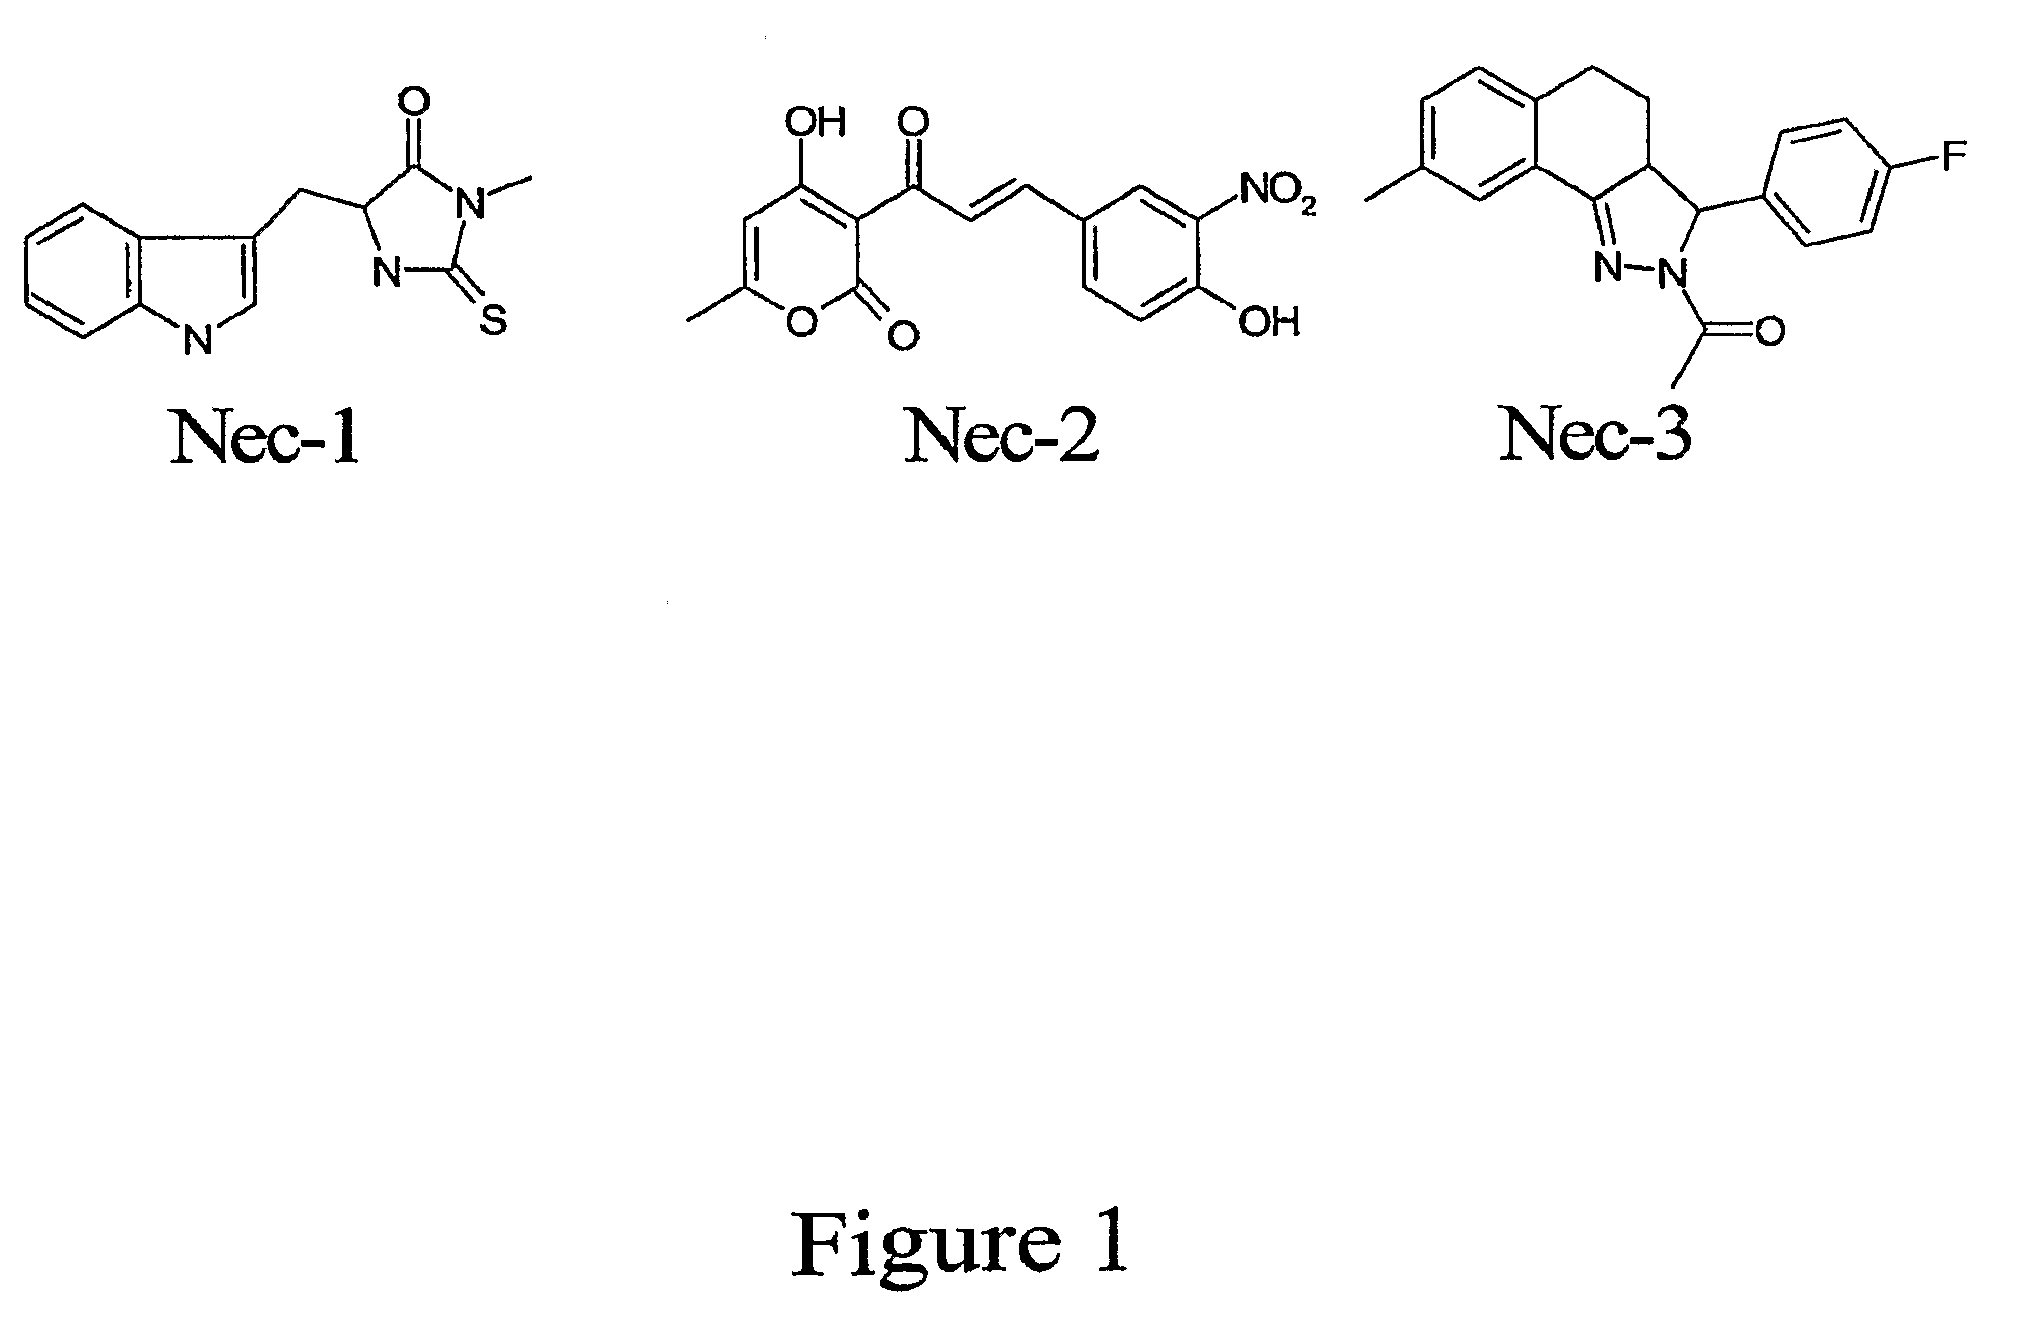 Tricyclic necrostatin compounds